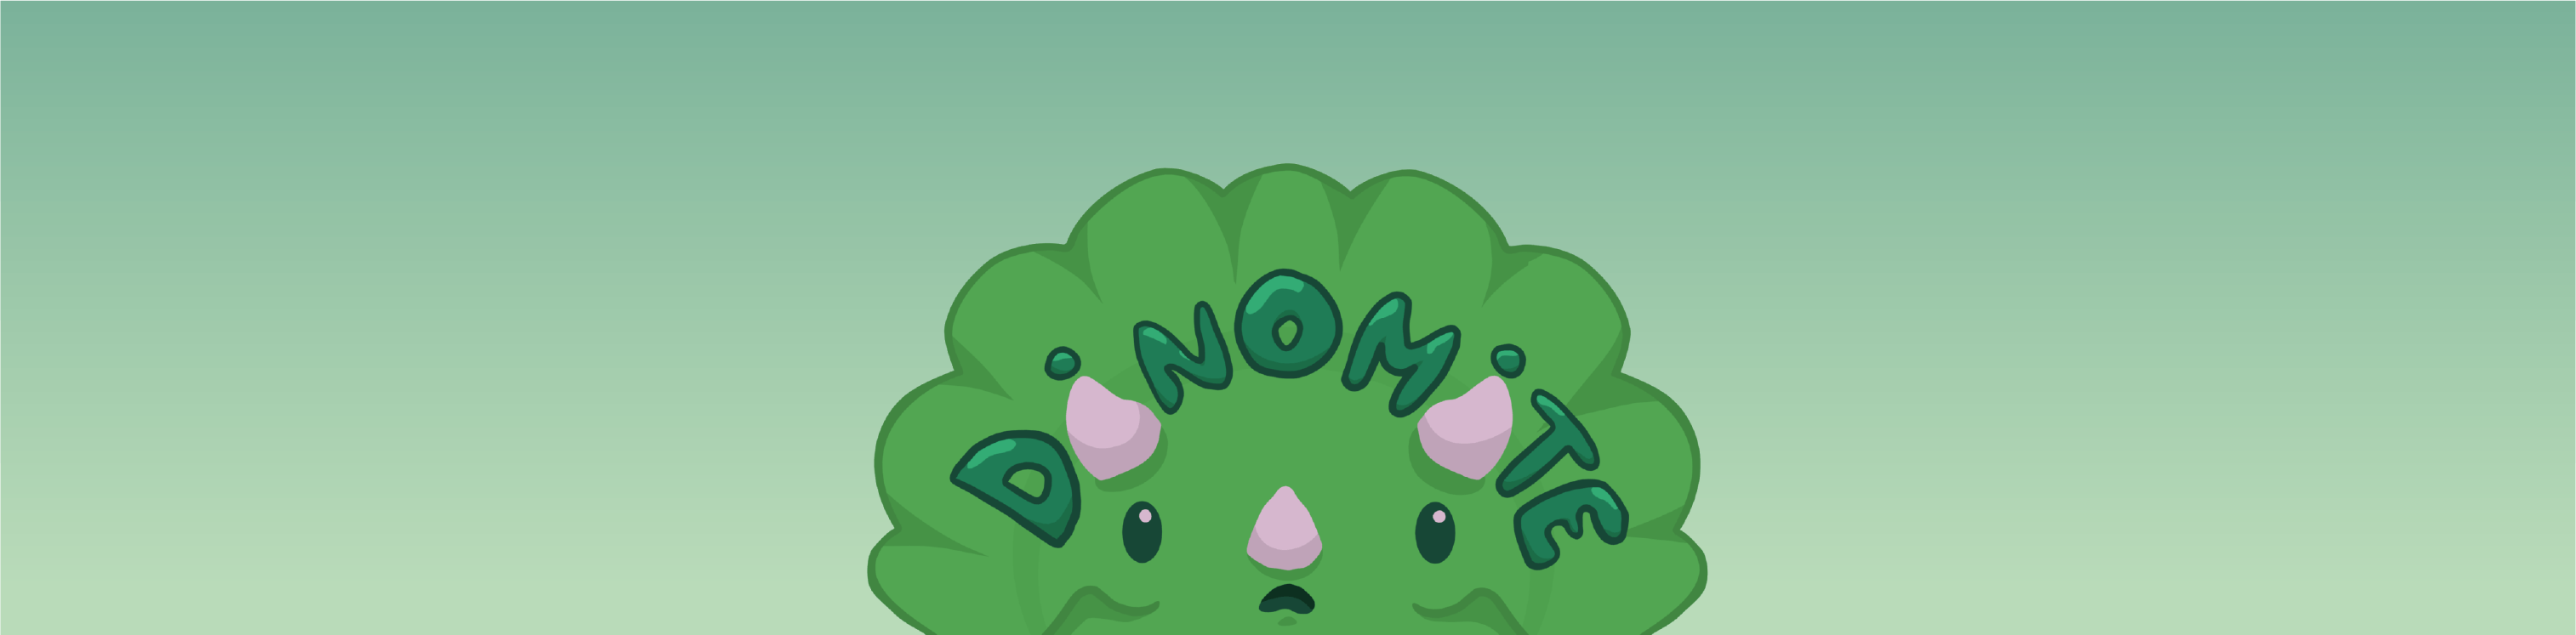 Dinomite